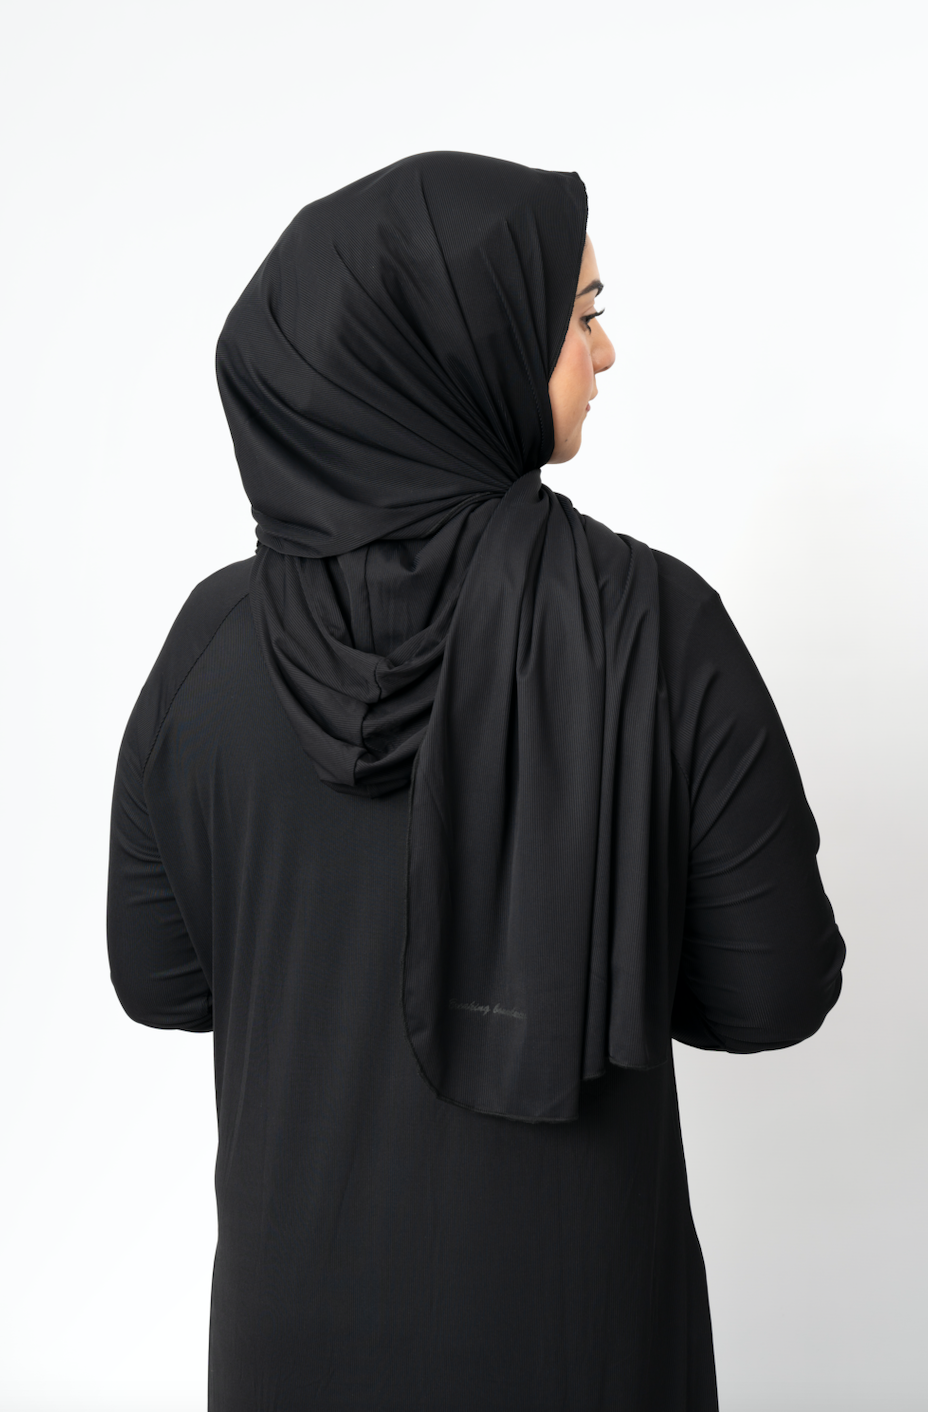 Active/Swimming Hijab - Discrete Black